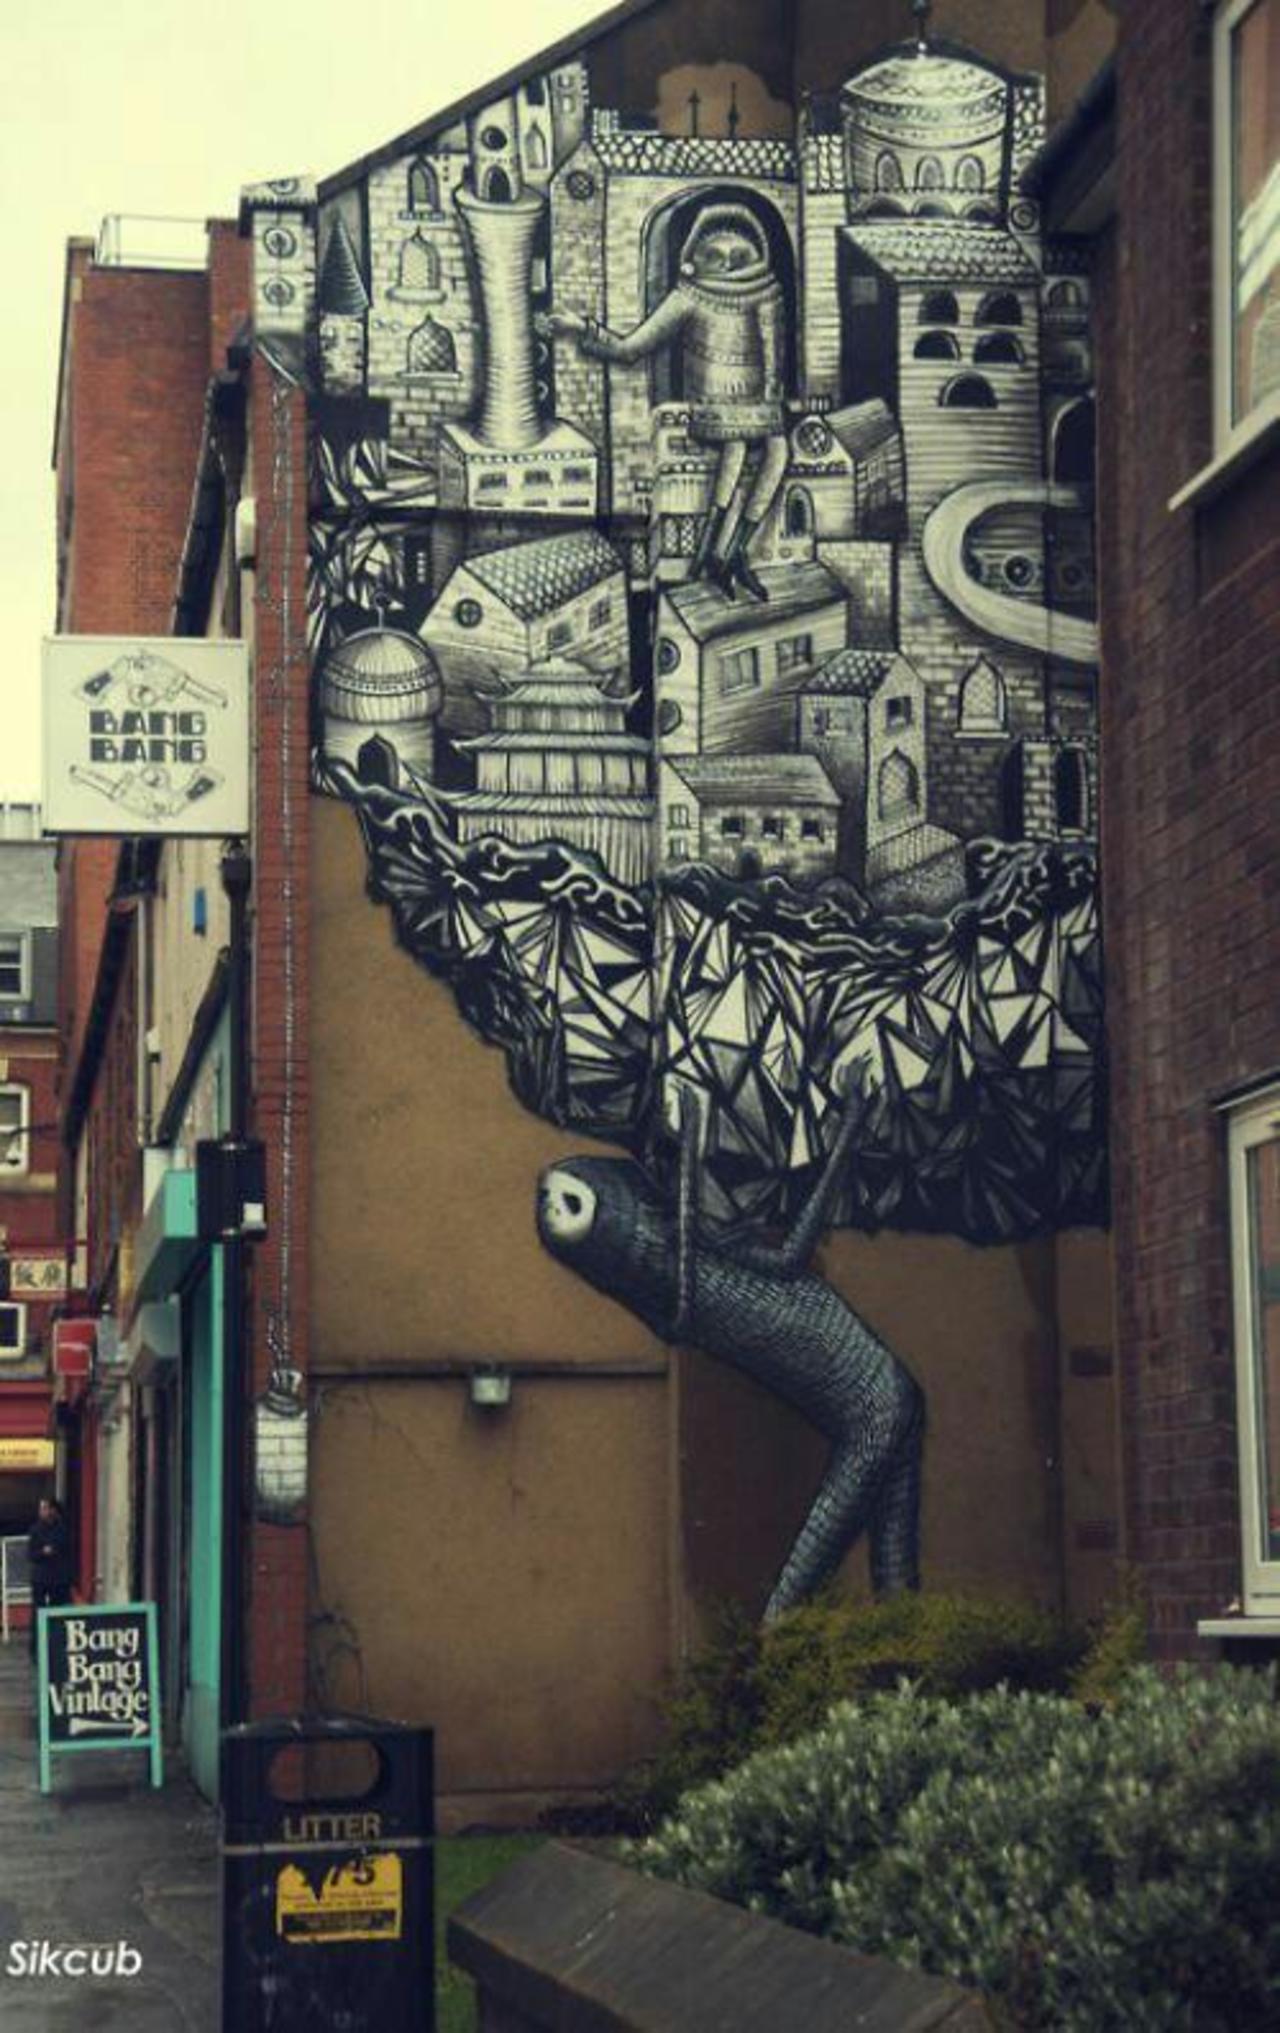 Beautiful detailed #artwork 
#art
#Streetart 
#Graffiti 
#mural
#urbanart 
http://theberry.com/2012/04/23/morning-coffee-39-photos-158/ http://t.co/YhaWhF30f0